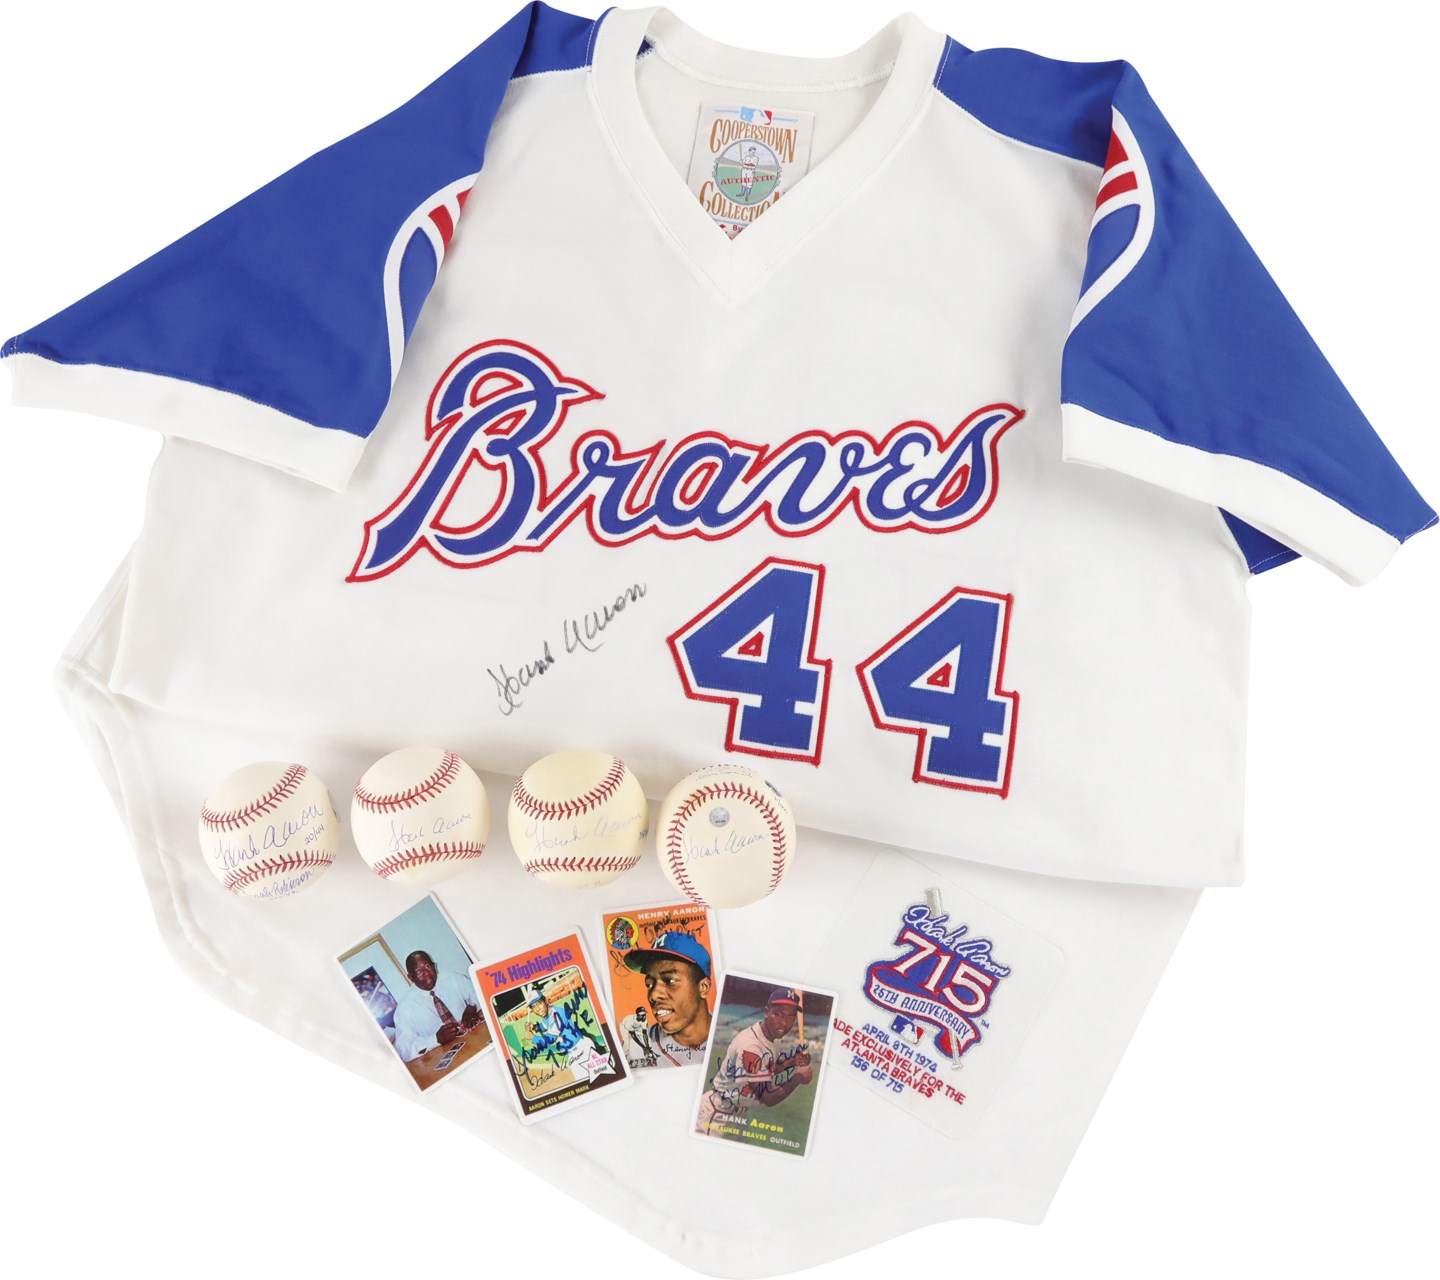 Baseball Autographs - Hank Aaron Signed Throwback Jersey, Baseball, & Card Collection (8)